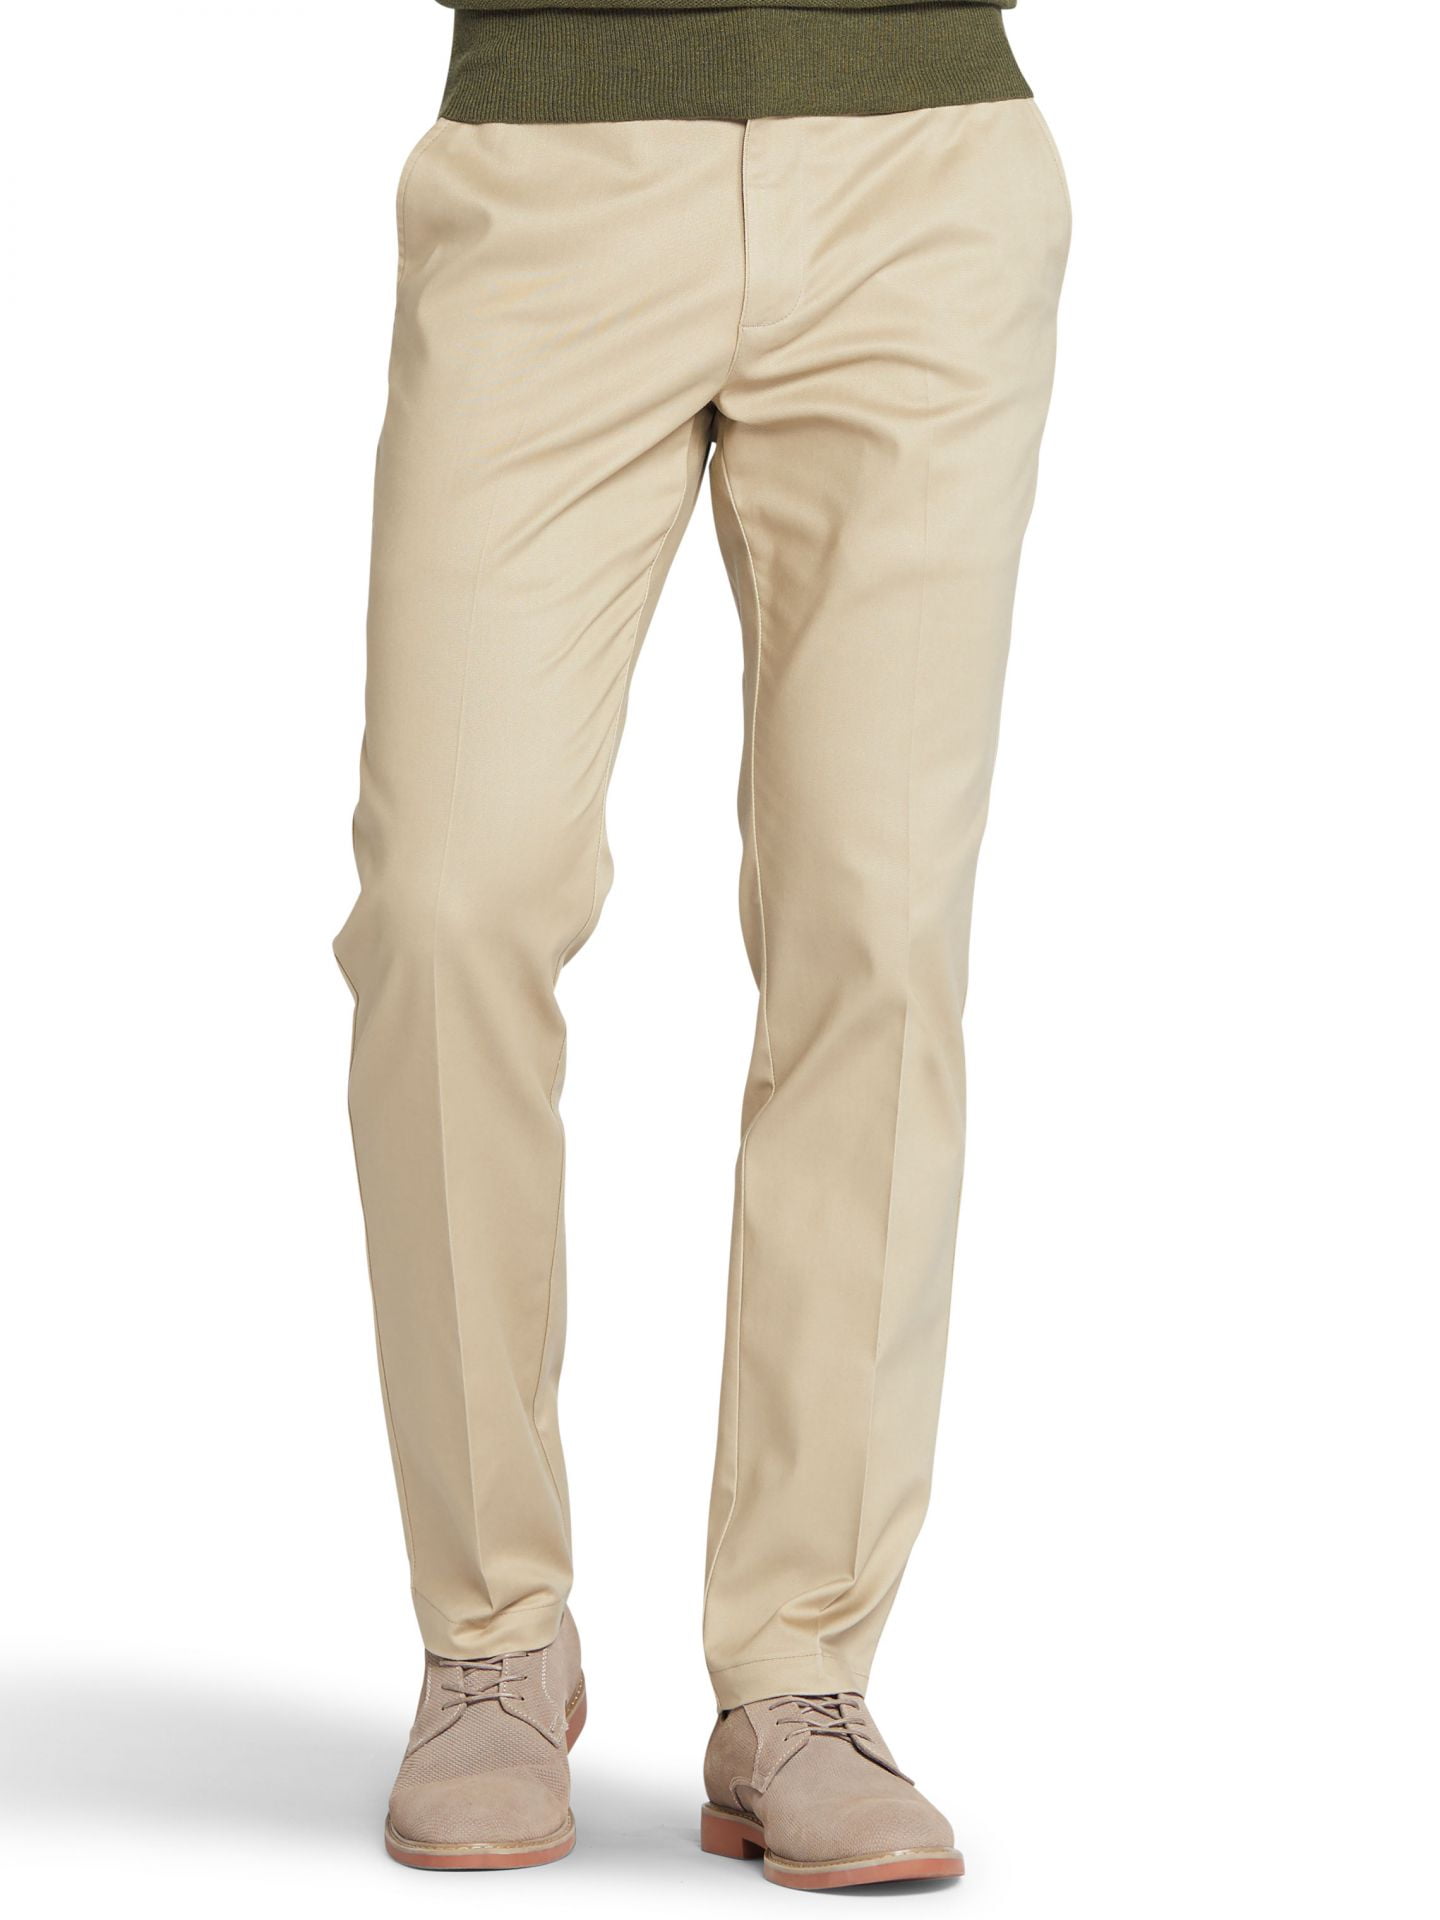 Lee Men's Total Freedom Slim Fit Flat Front Pants - Khaki, Khaki, 33X32 ...